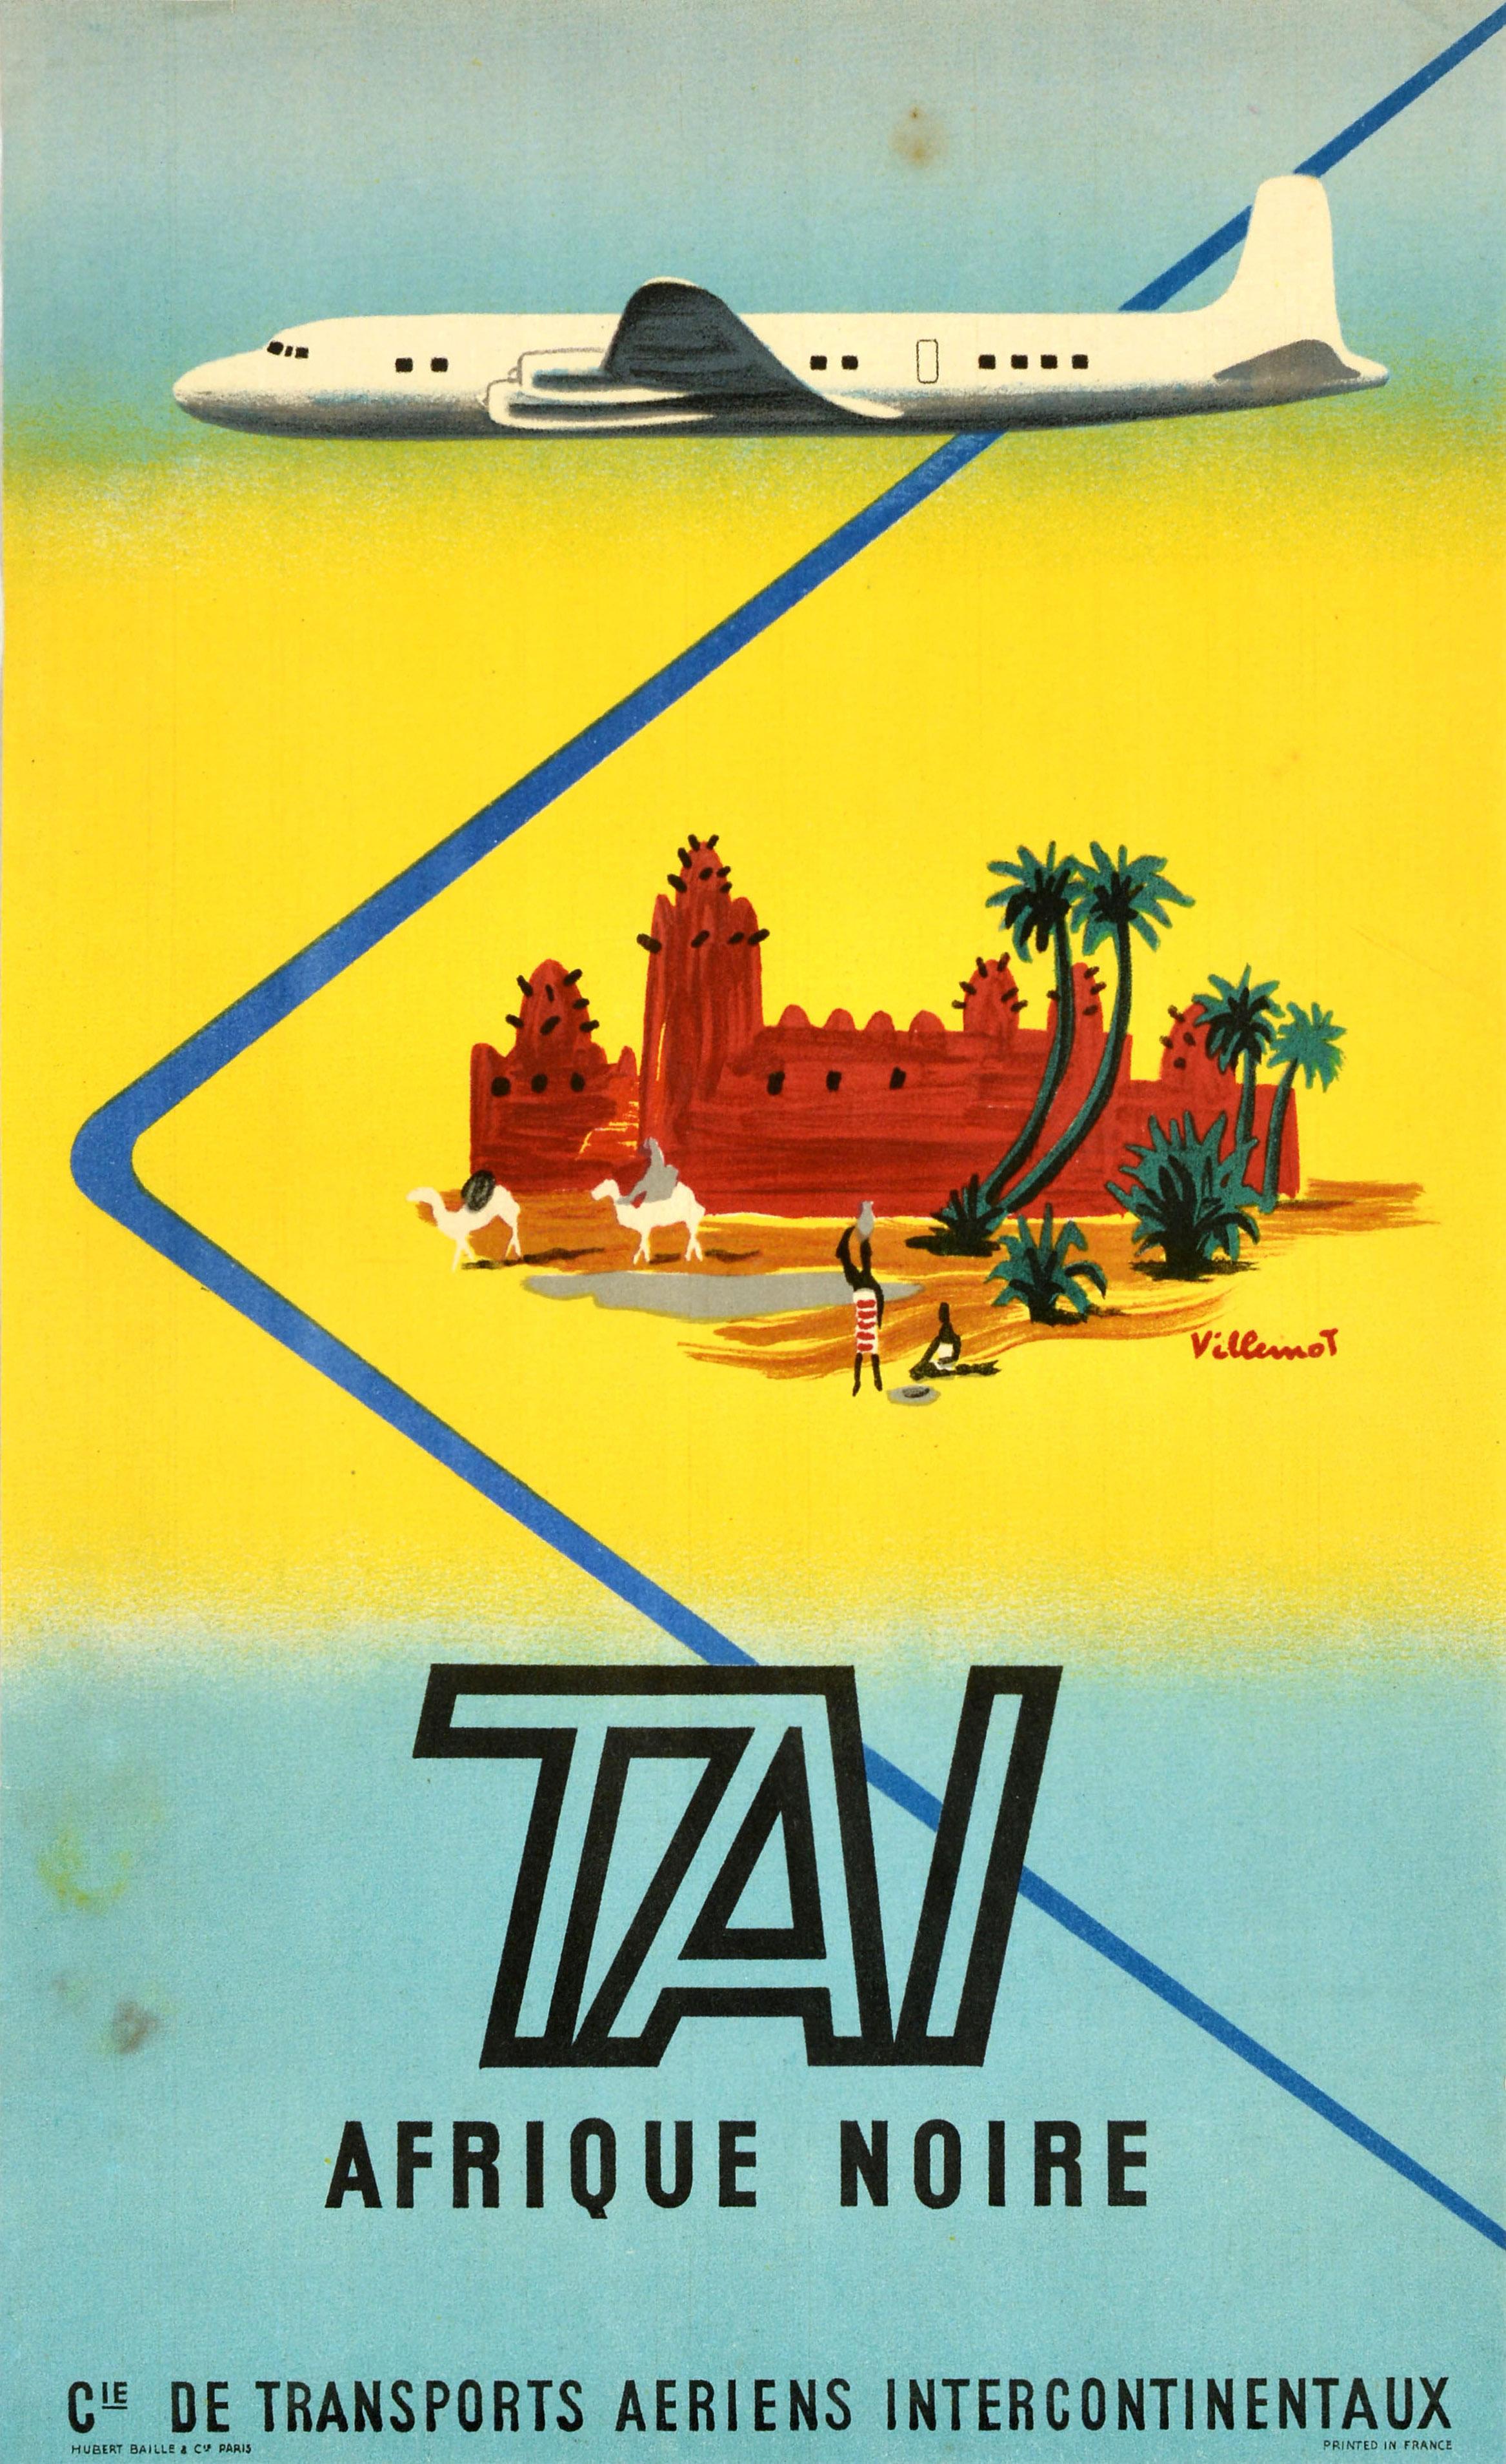 Bernard Villemot Print - Original Vintage Travel Poster TAI Afrique Noire Sub Sahara Africa Villemot Art